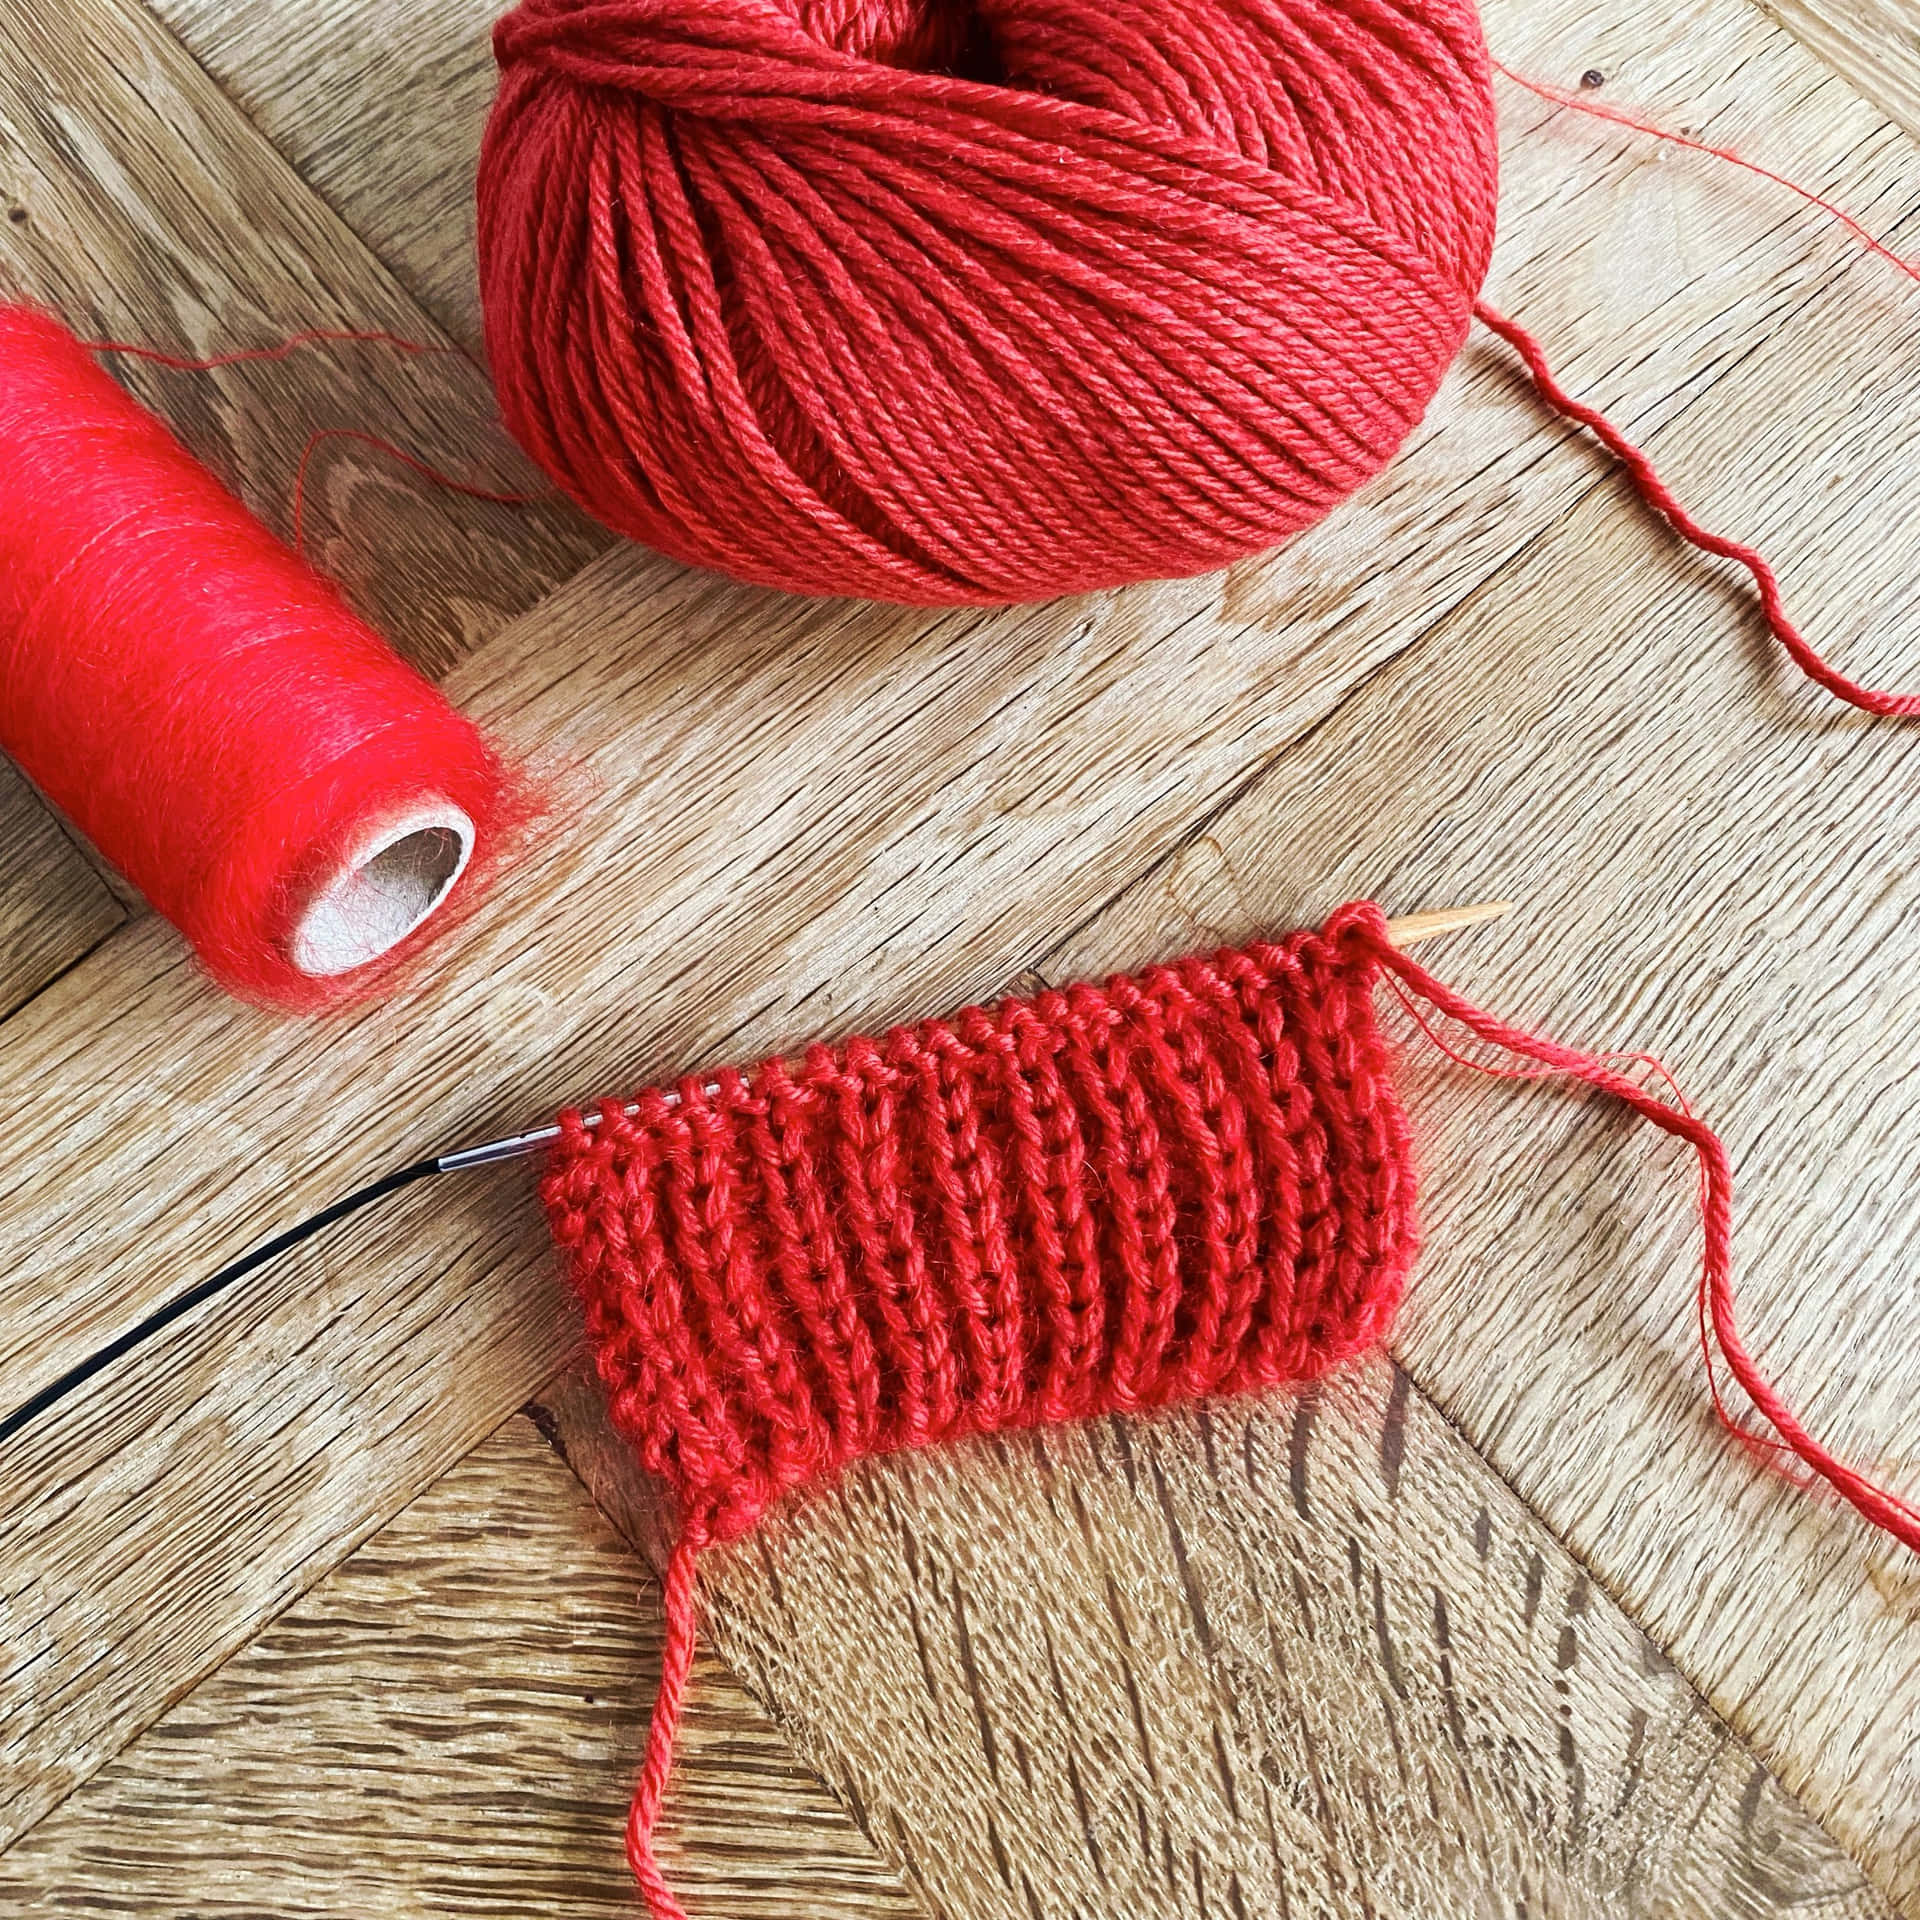 Knitting A Red Cotton Yarn Wallpaper